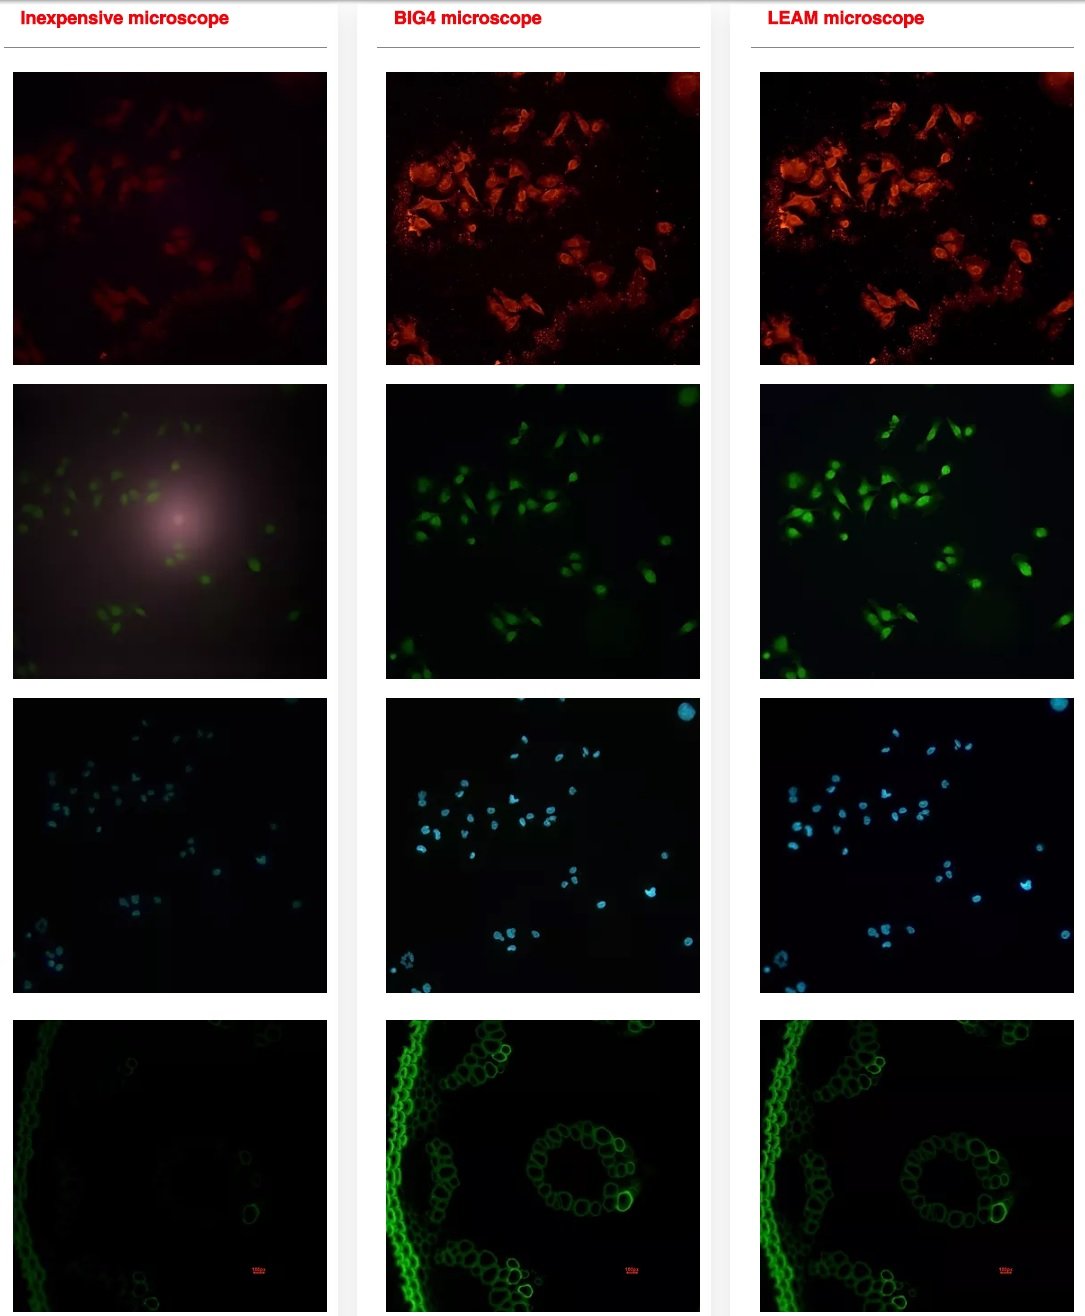 Comparison of fluorescence images